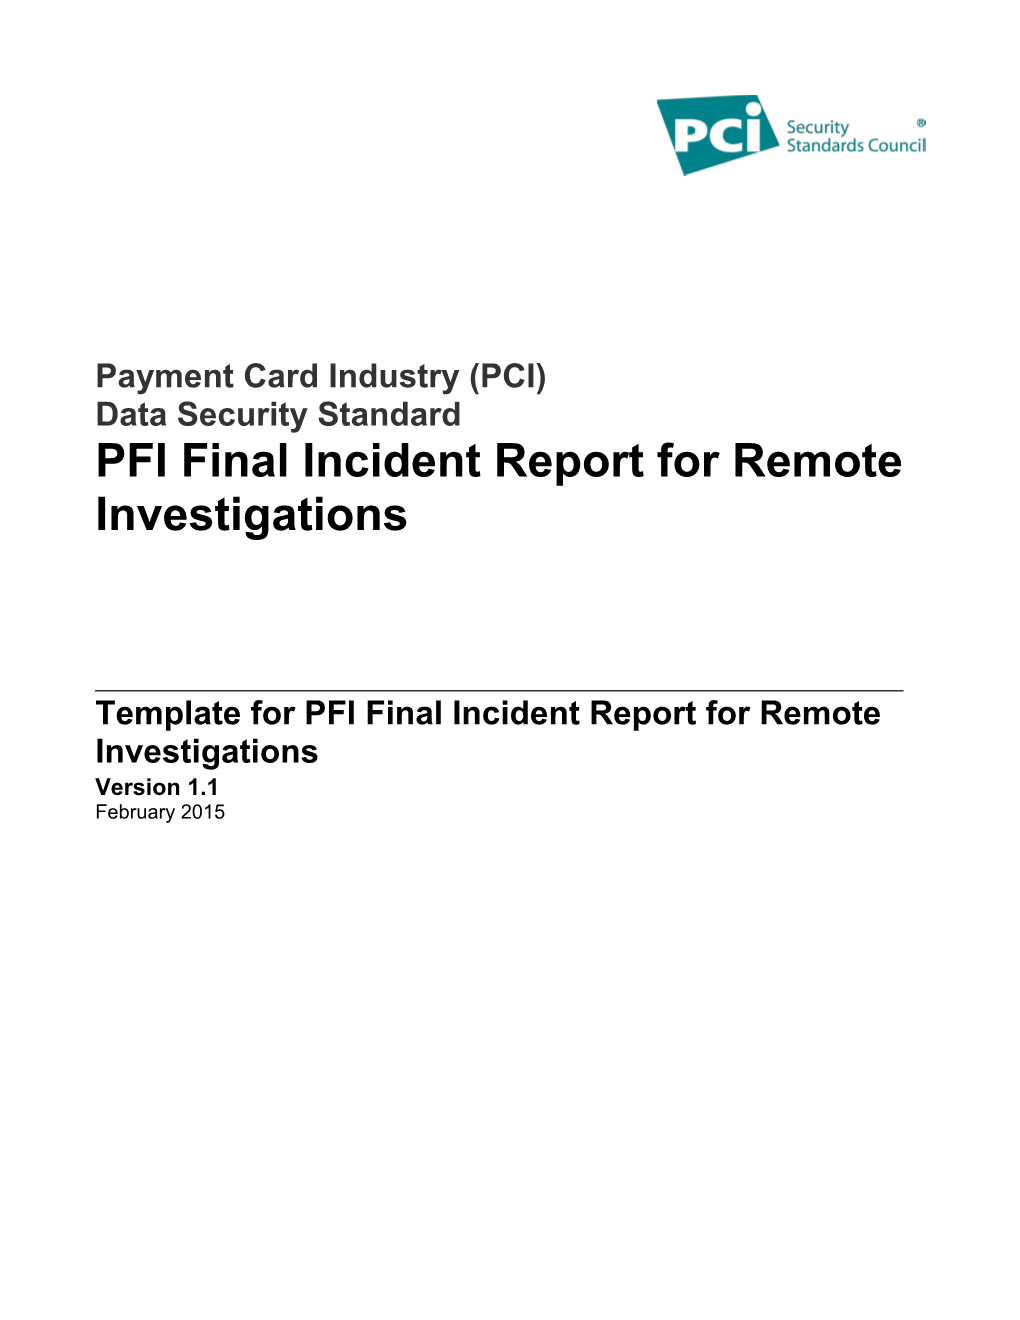 PFI RT Final Incident Response